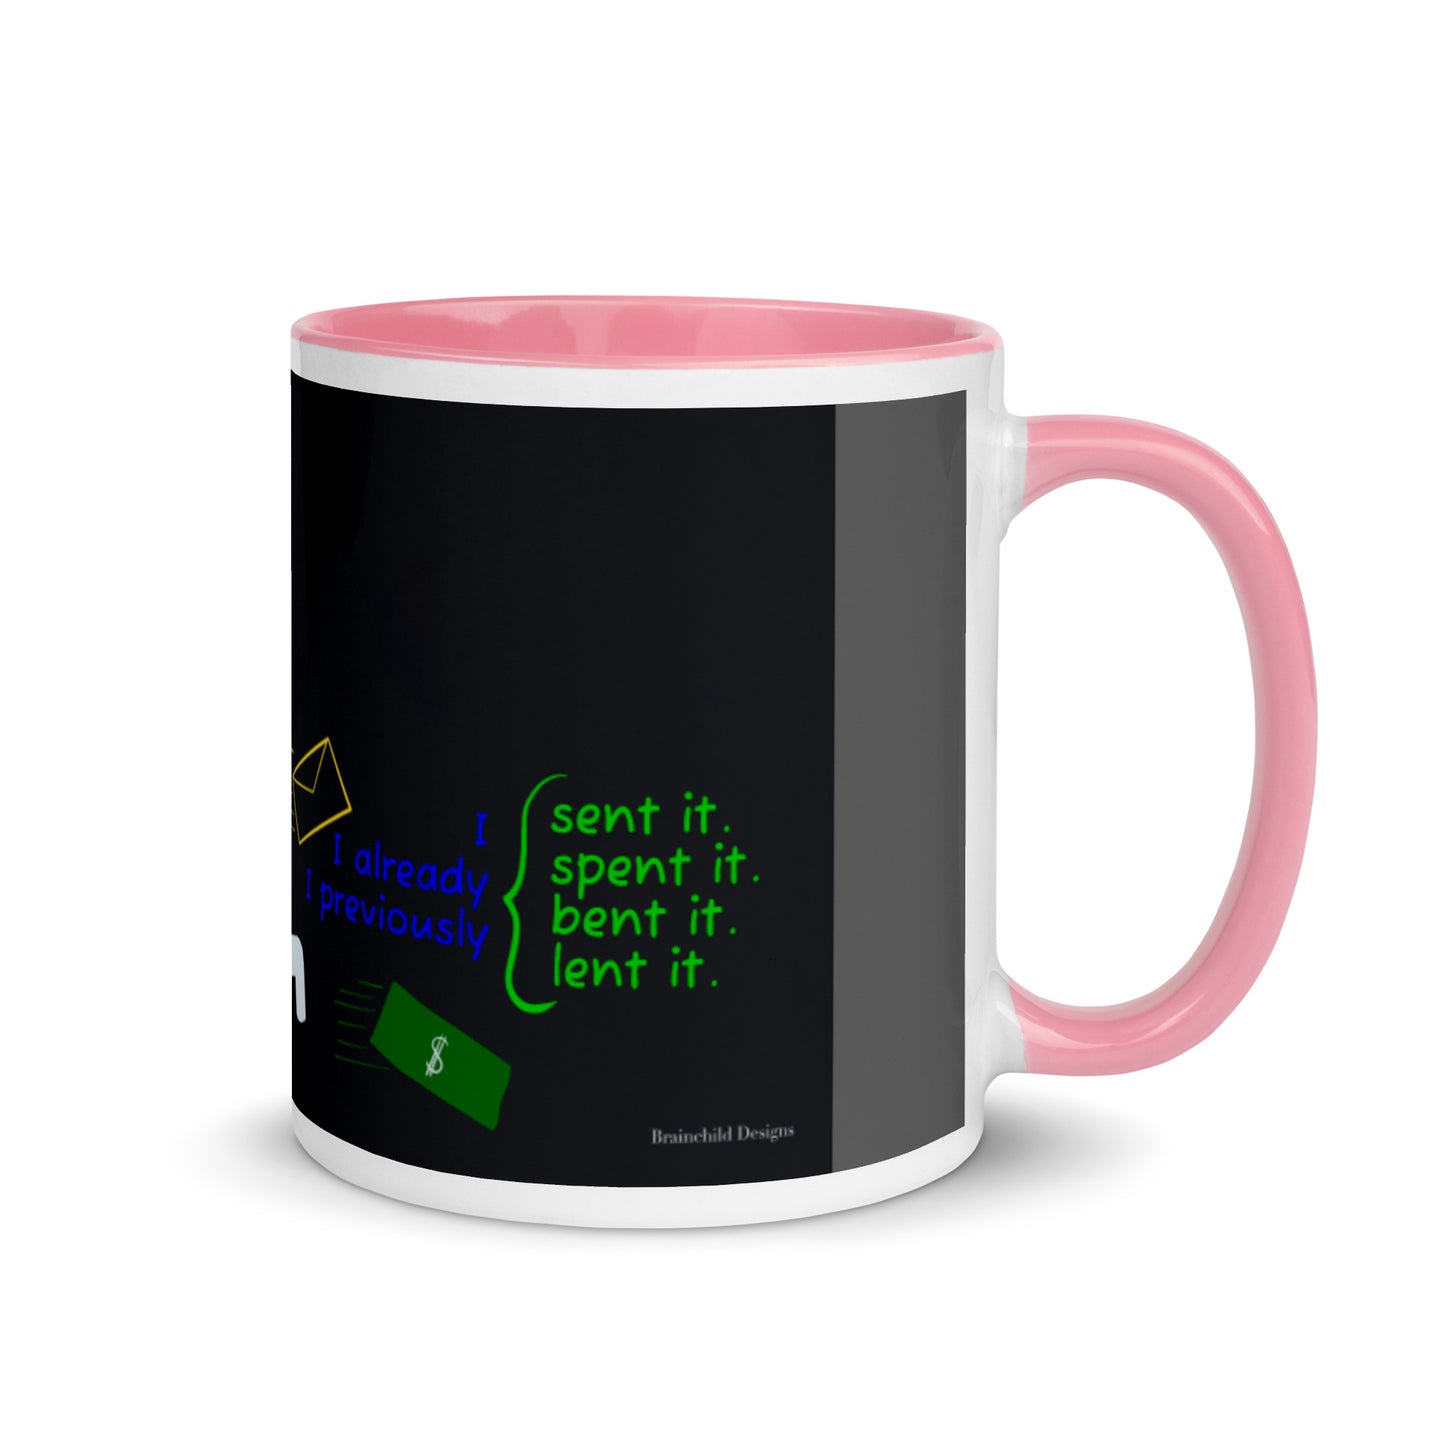 Pre/Past Tense Mug with Color Inside - Brainchild Designs